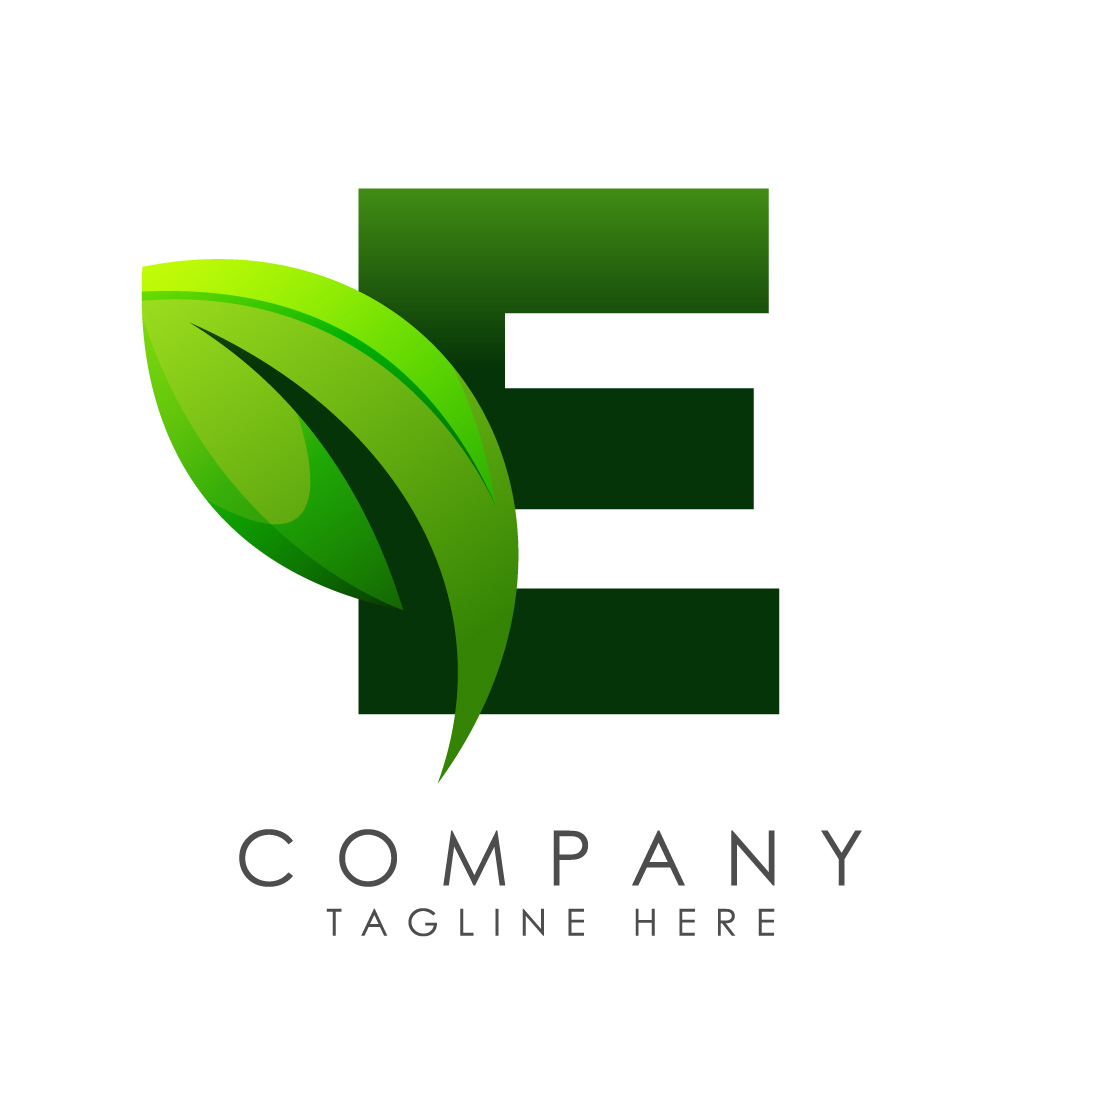 Initial E alphabet with a leaf Eco-friendly logo concept Graphic alphabet symbol for business and company identity cover image.